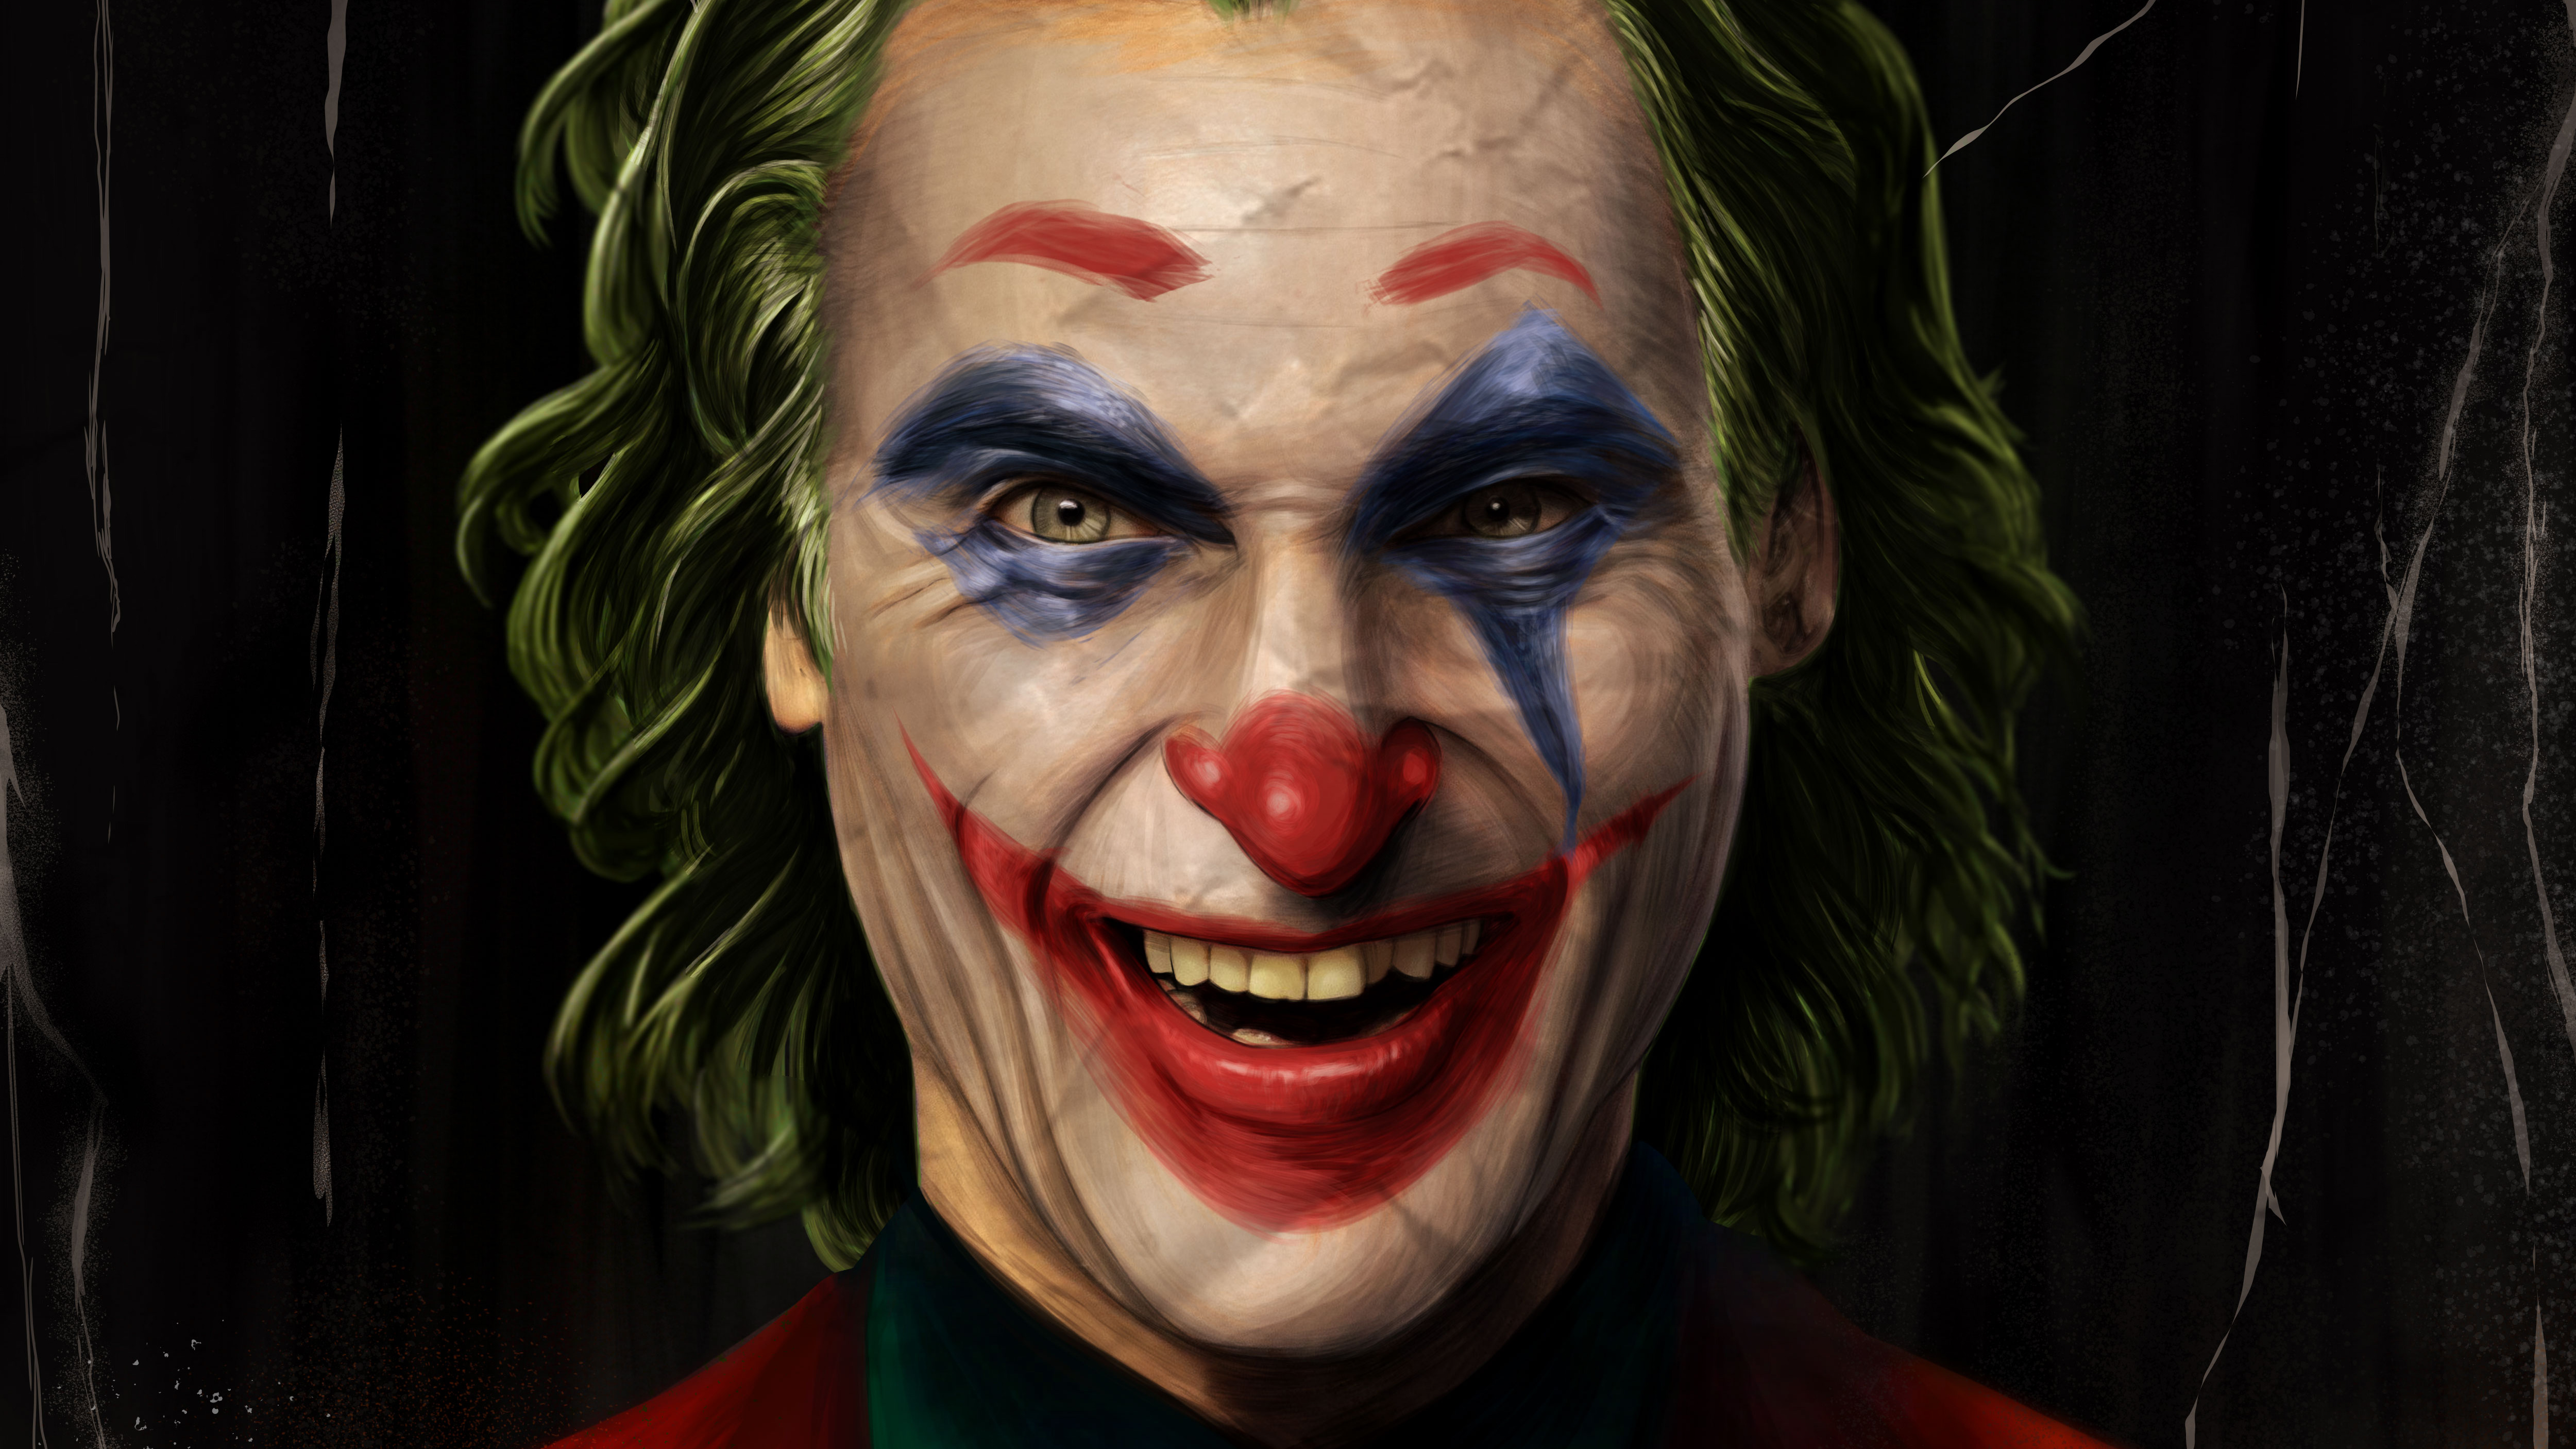 304378 Joker 2019 Joaquin Phoenix Art 4k Wallpaper Mo - vrogue.co